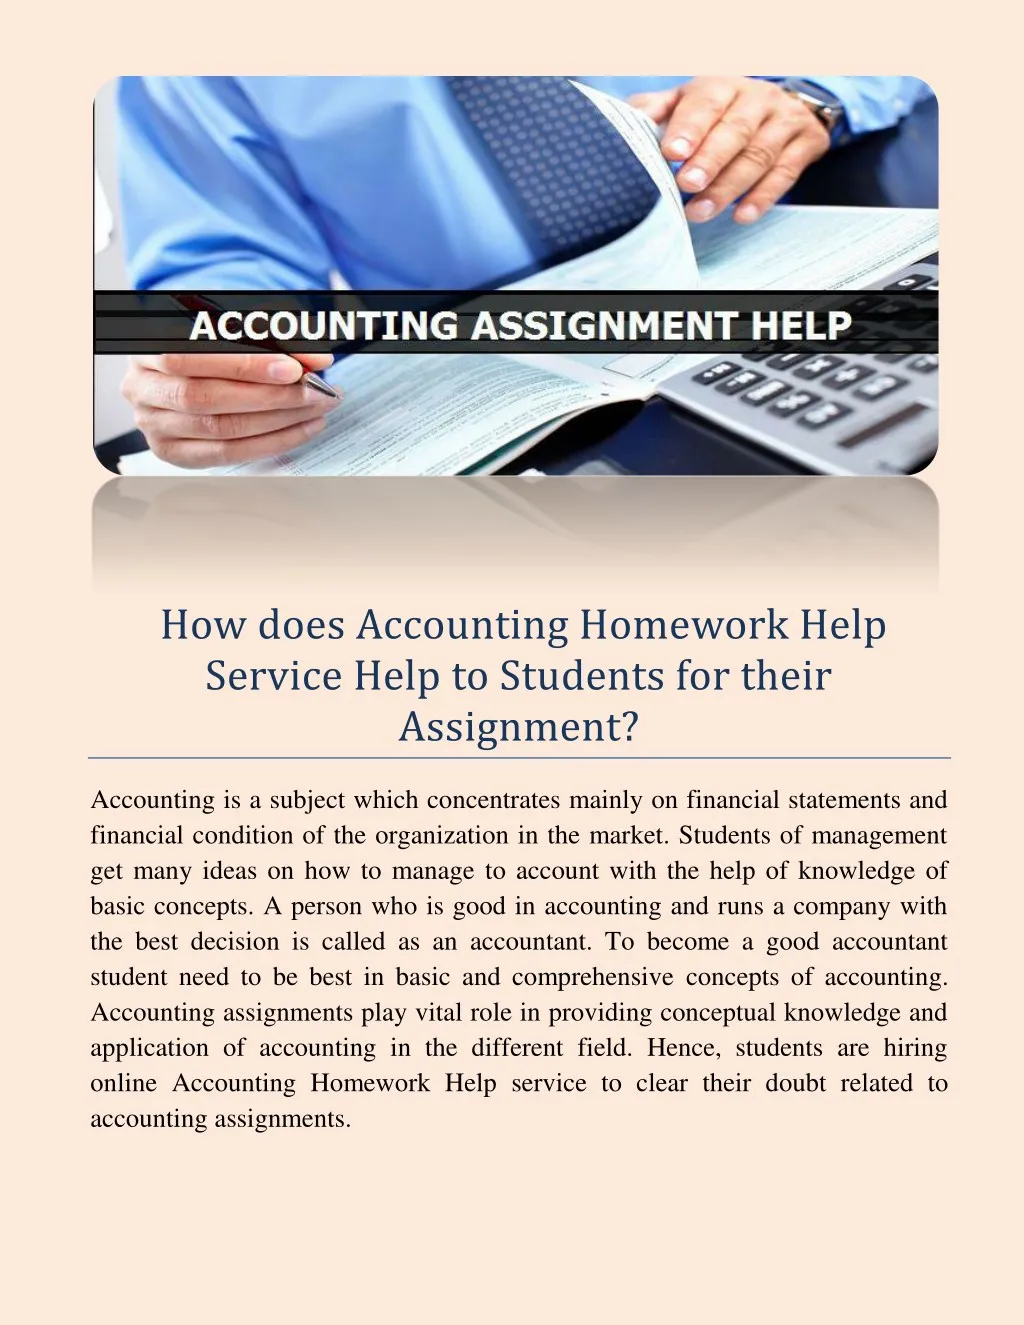 how does accounting homework help service help